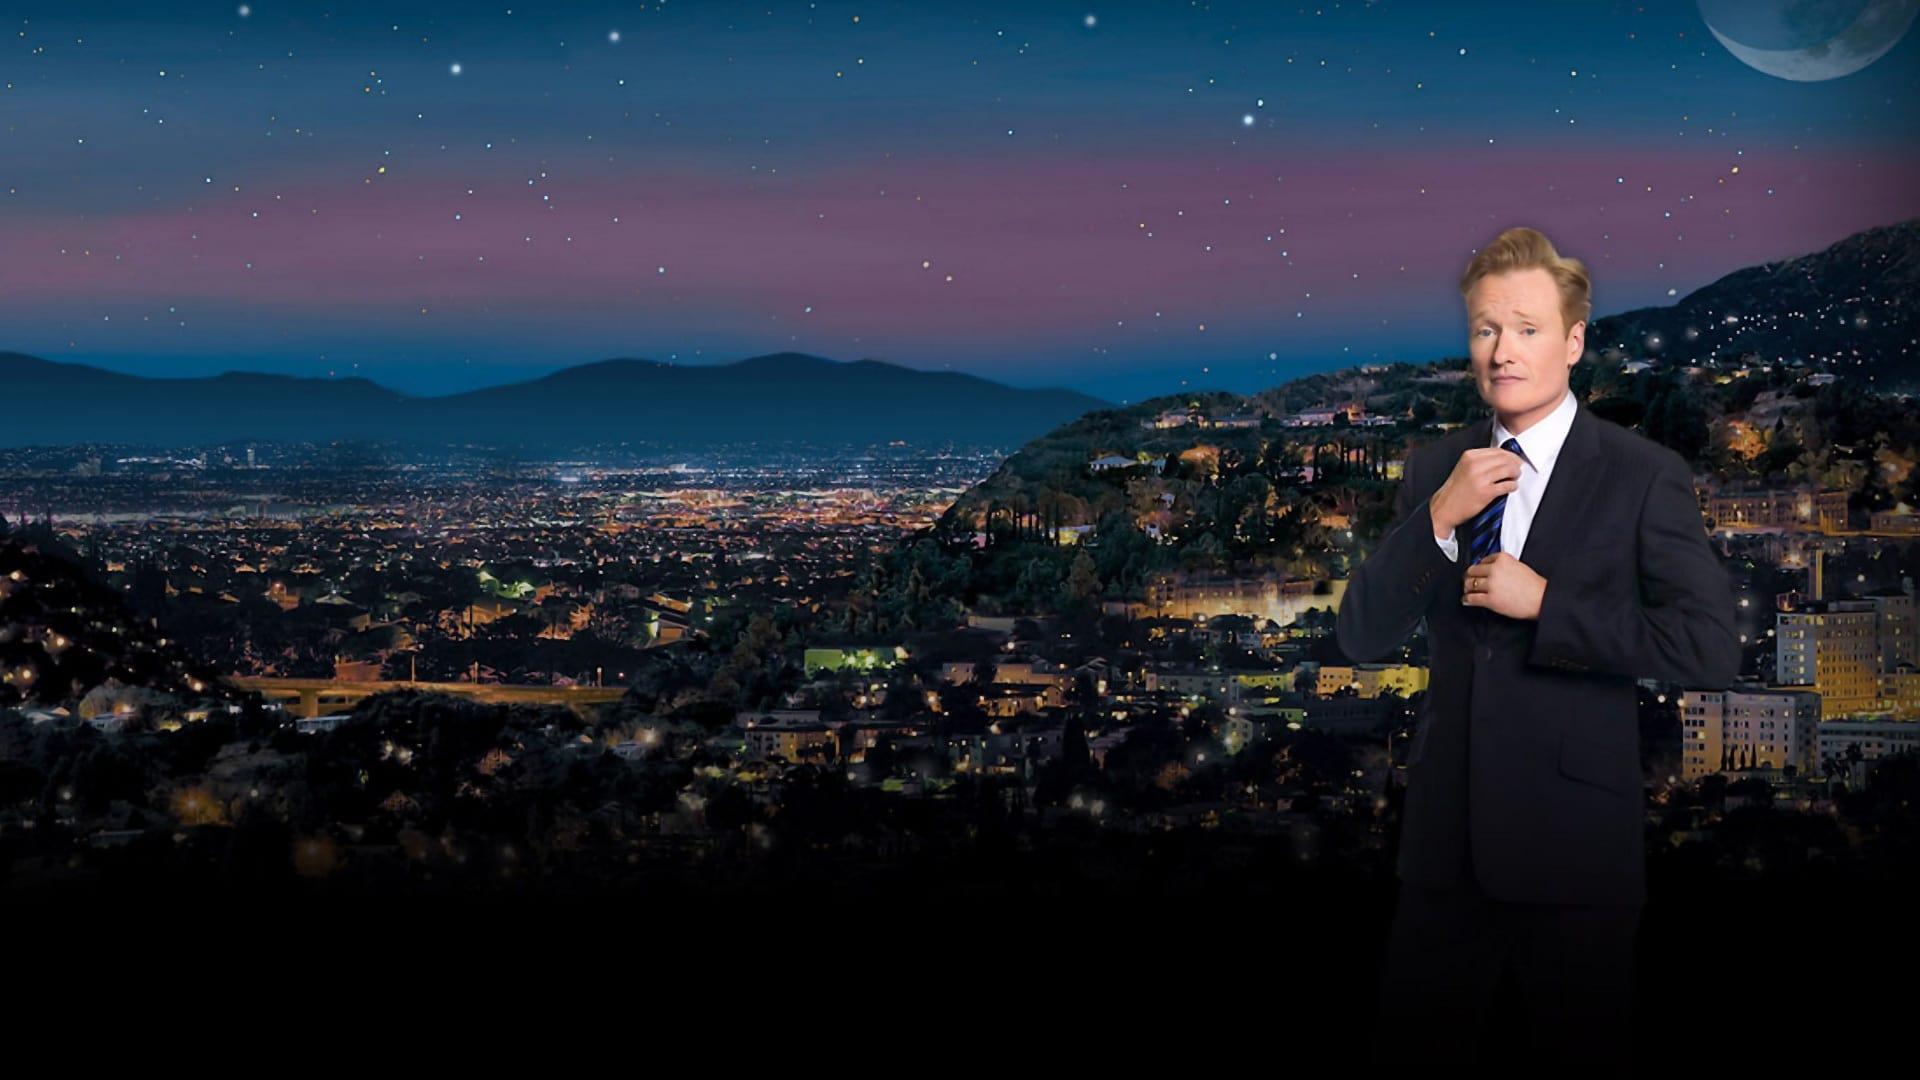 The Tonight Show with Conan O'Brien backdrop